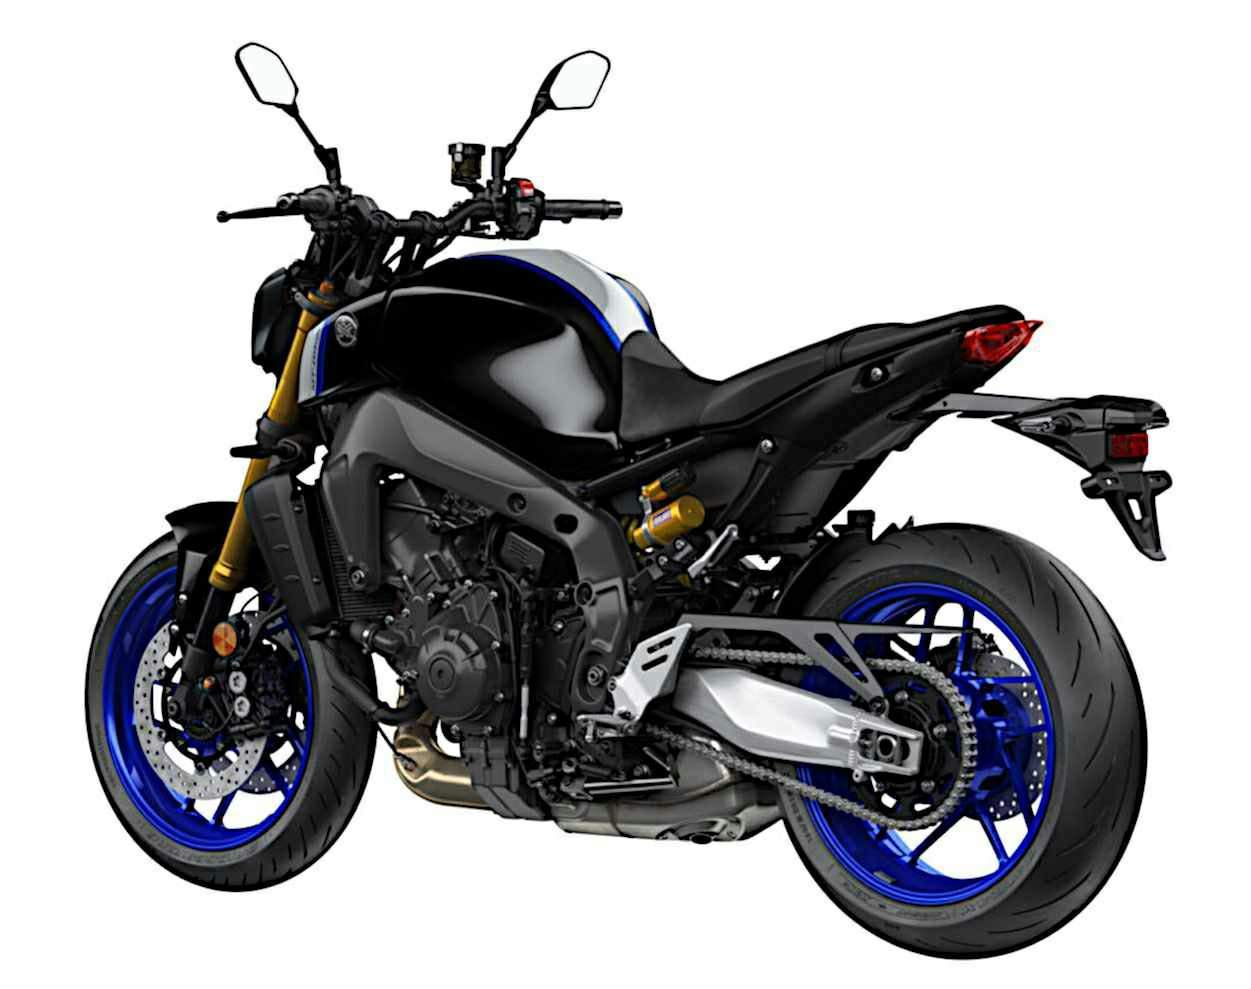 Yamaha MT-03 unveiled | Visordown